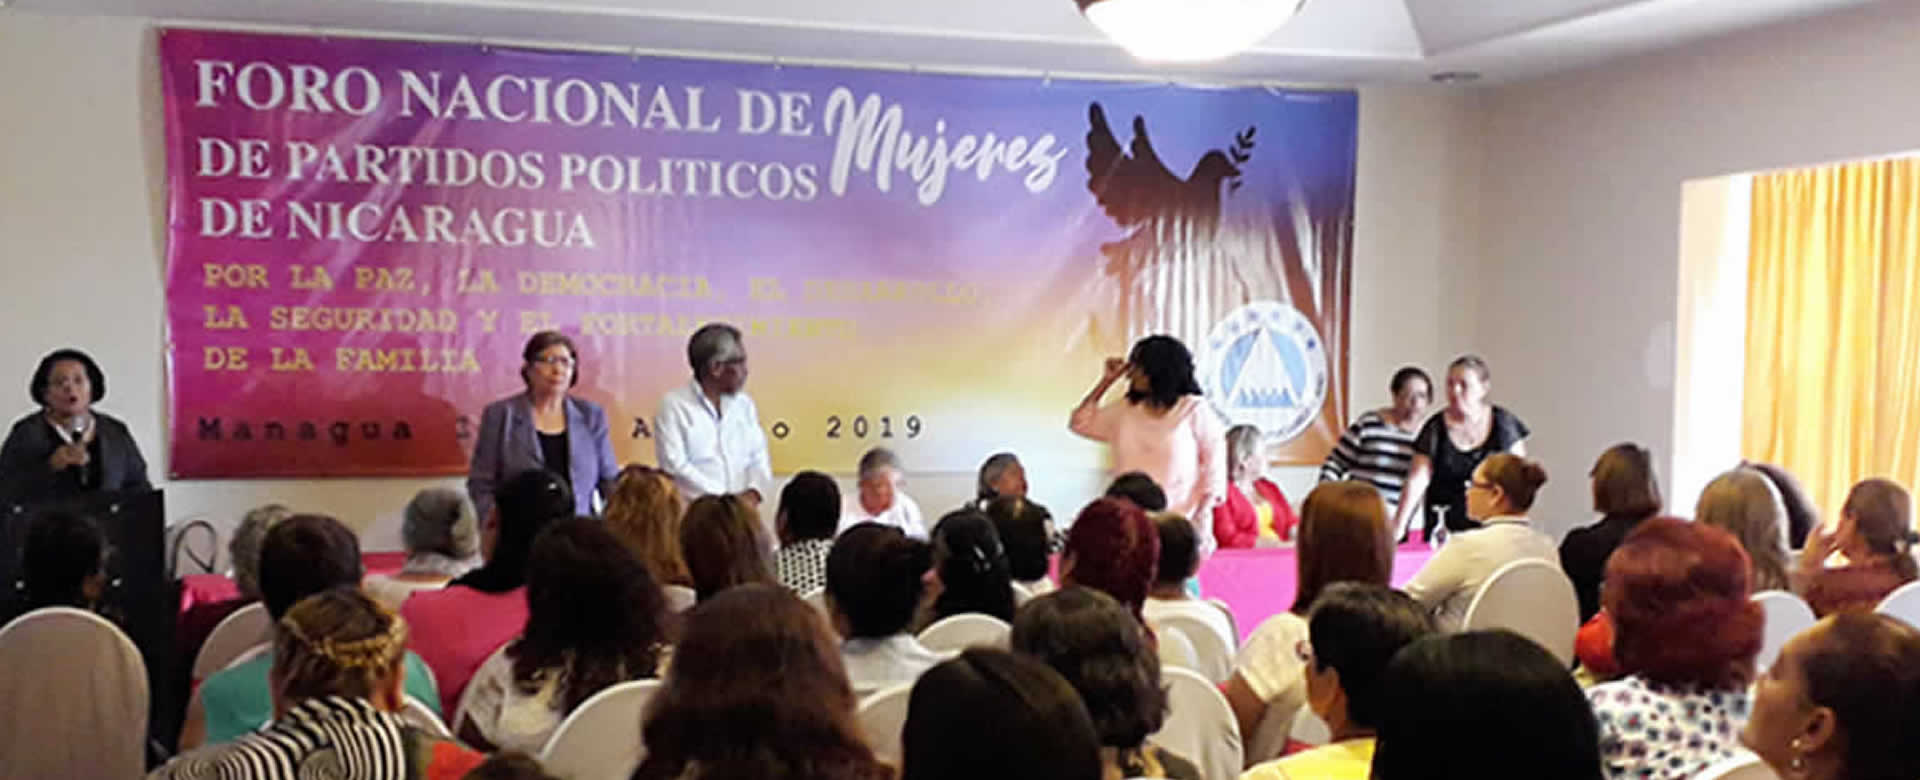 foro regional mujeres nicaragua